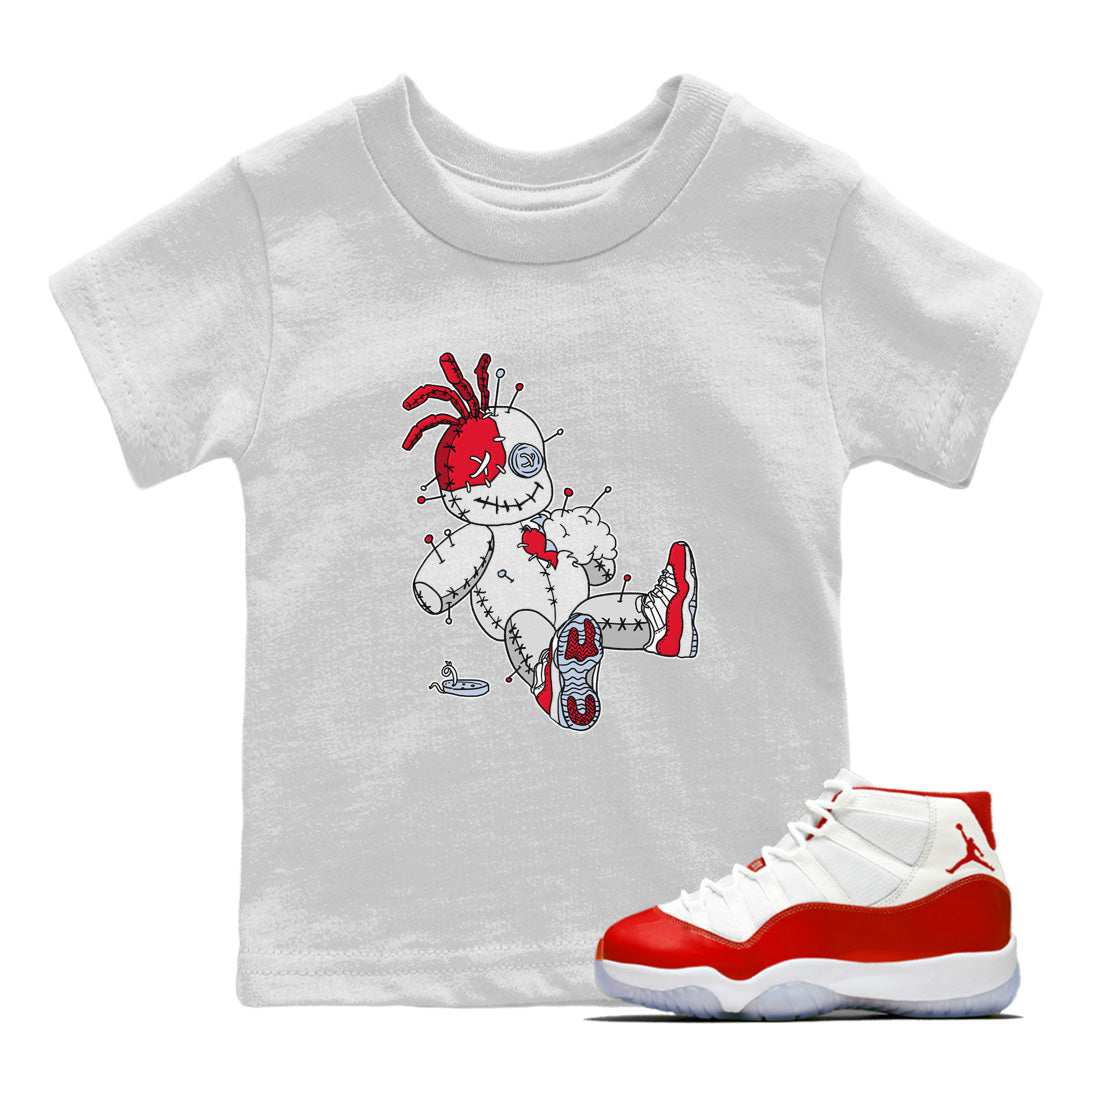 Jordan 11 Cherry Sneaker Match Tees Voodoo Doll Sneaker Tees Jordan 11 Cherry Sneaker Release Tees Kids Shirts